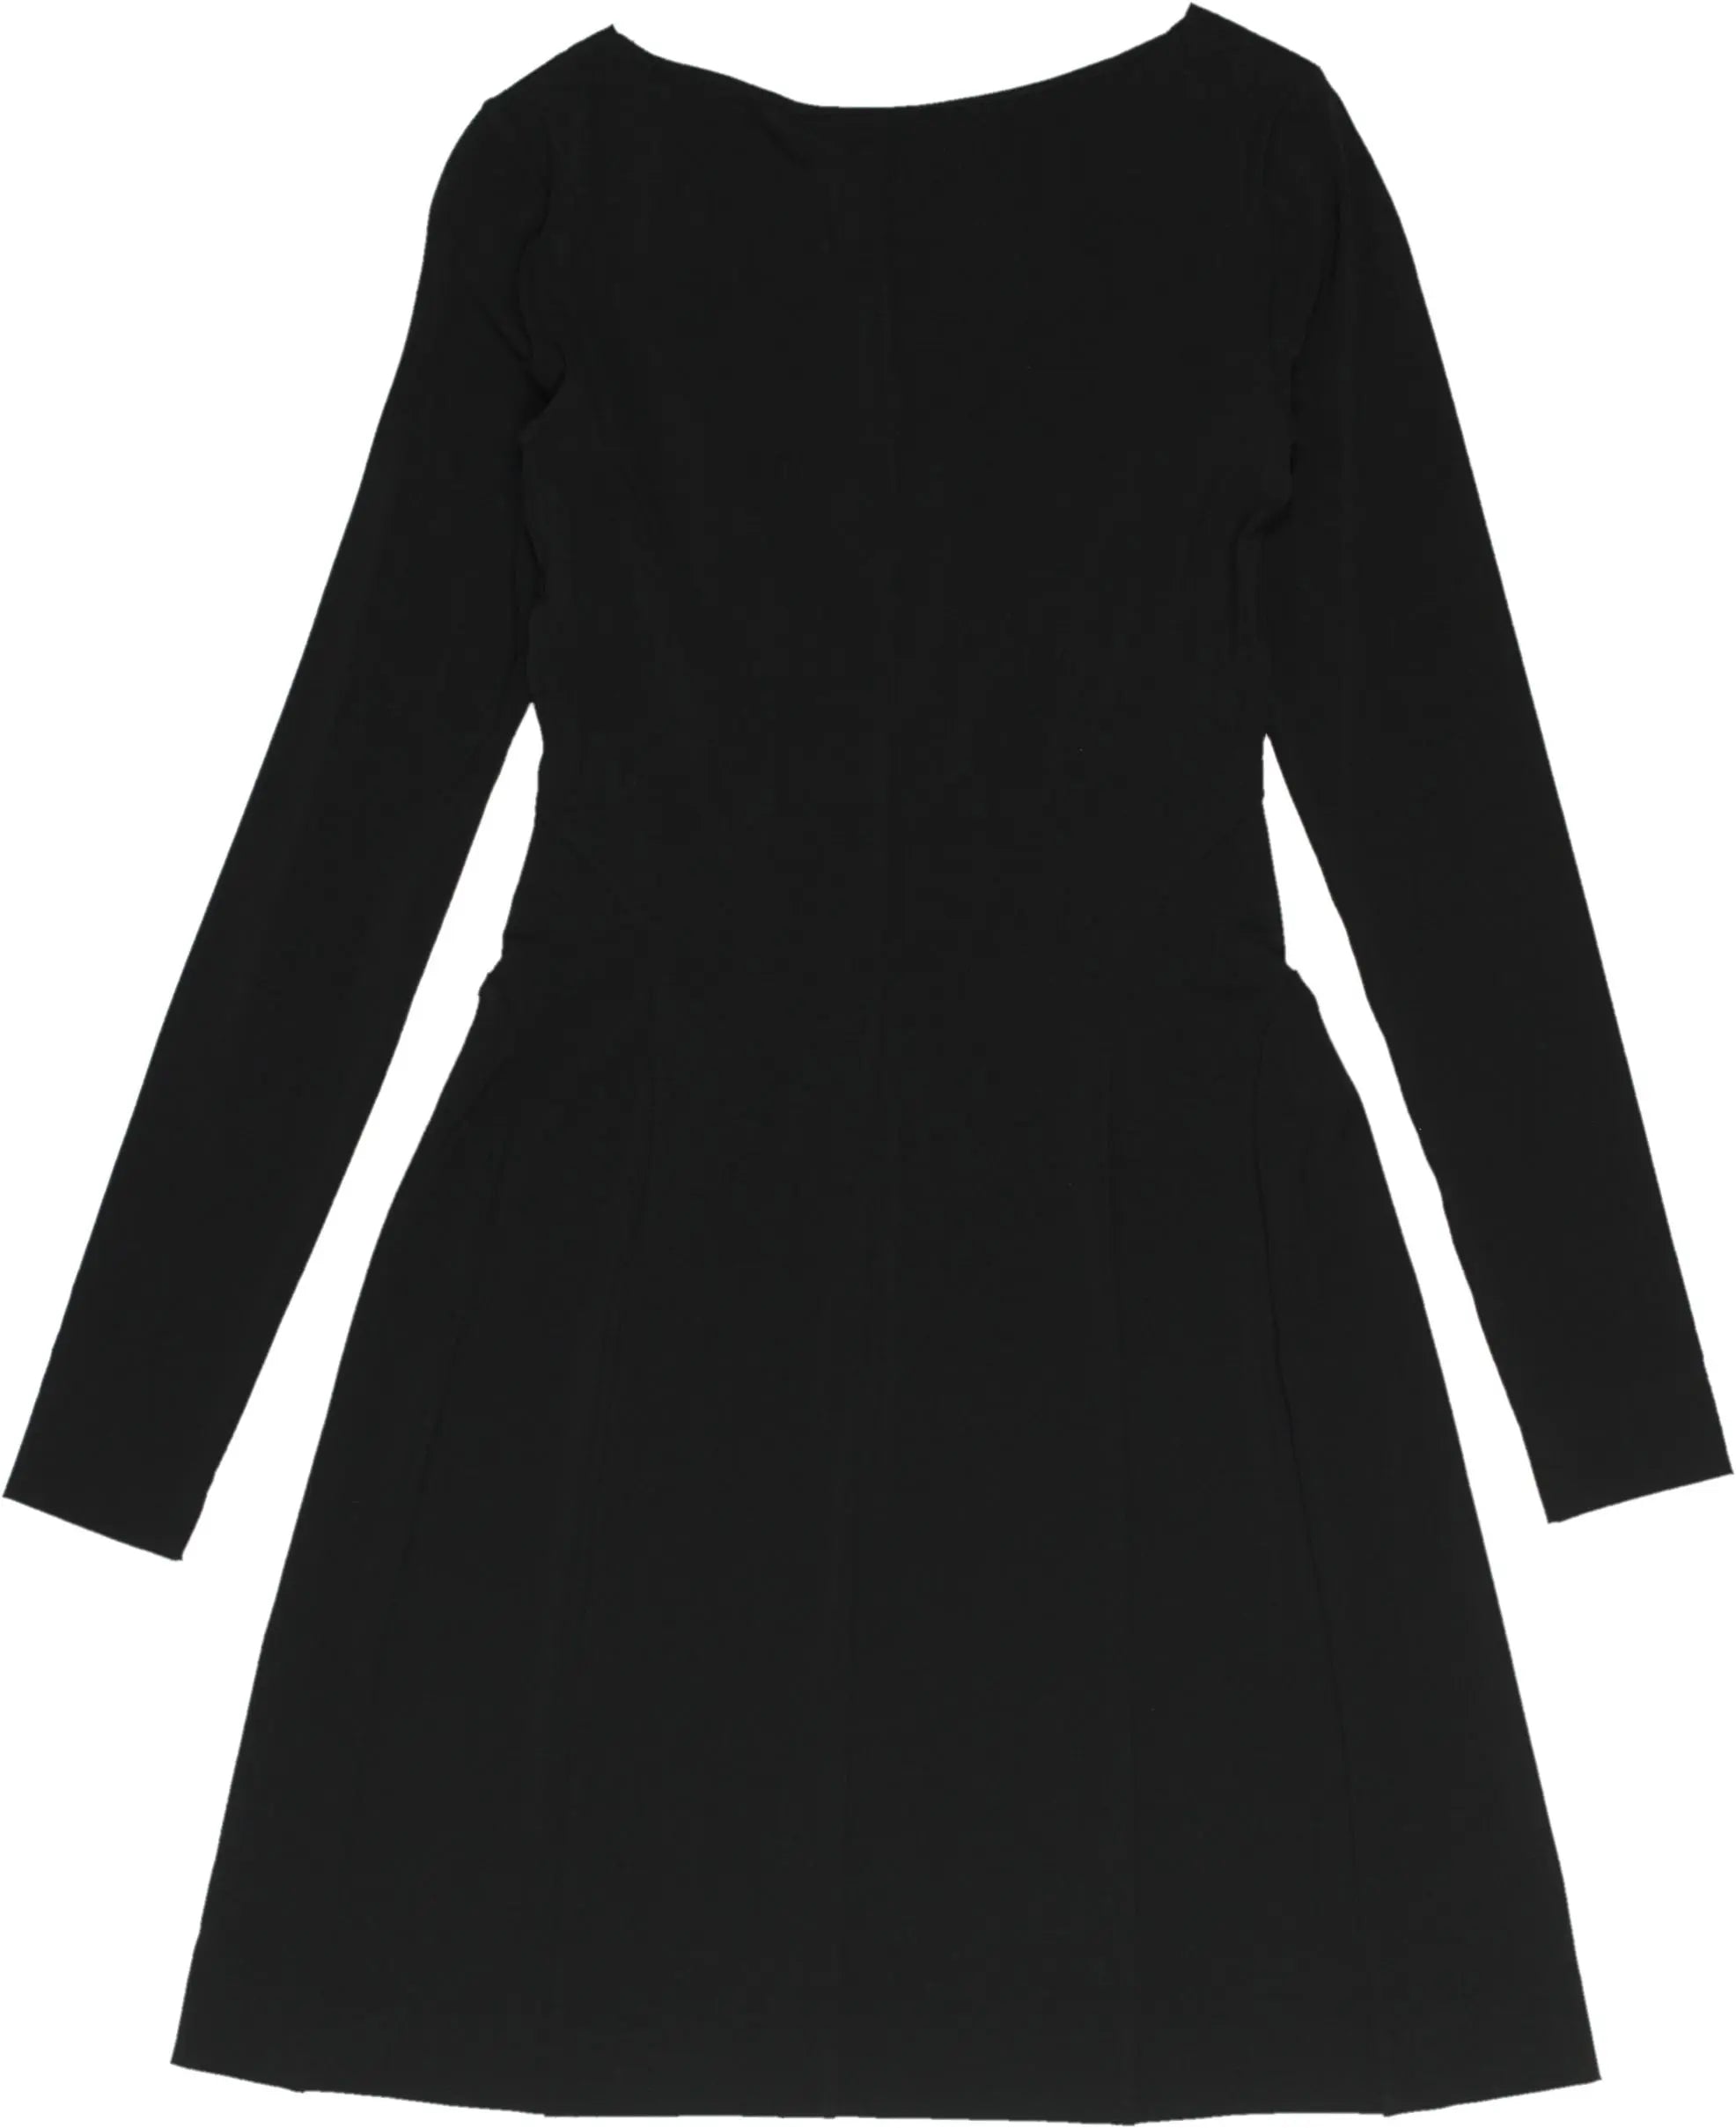 Alberta Ferretti - Long Sleeve Black Dress by Alberta Ferretti- ThriftTale.com - Vintage and second handclothing